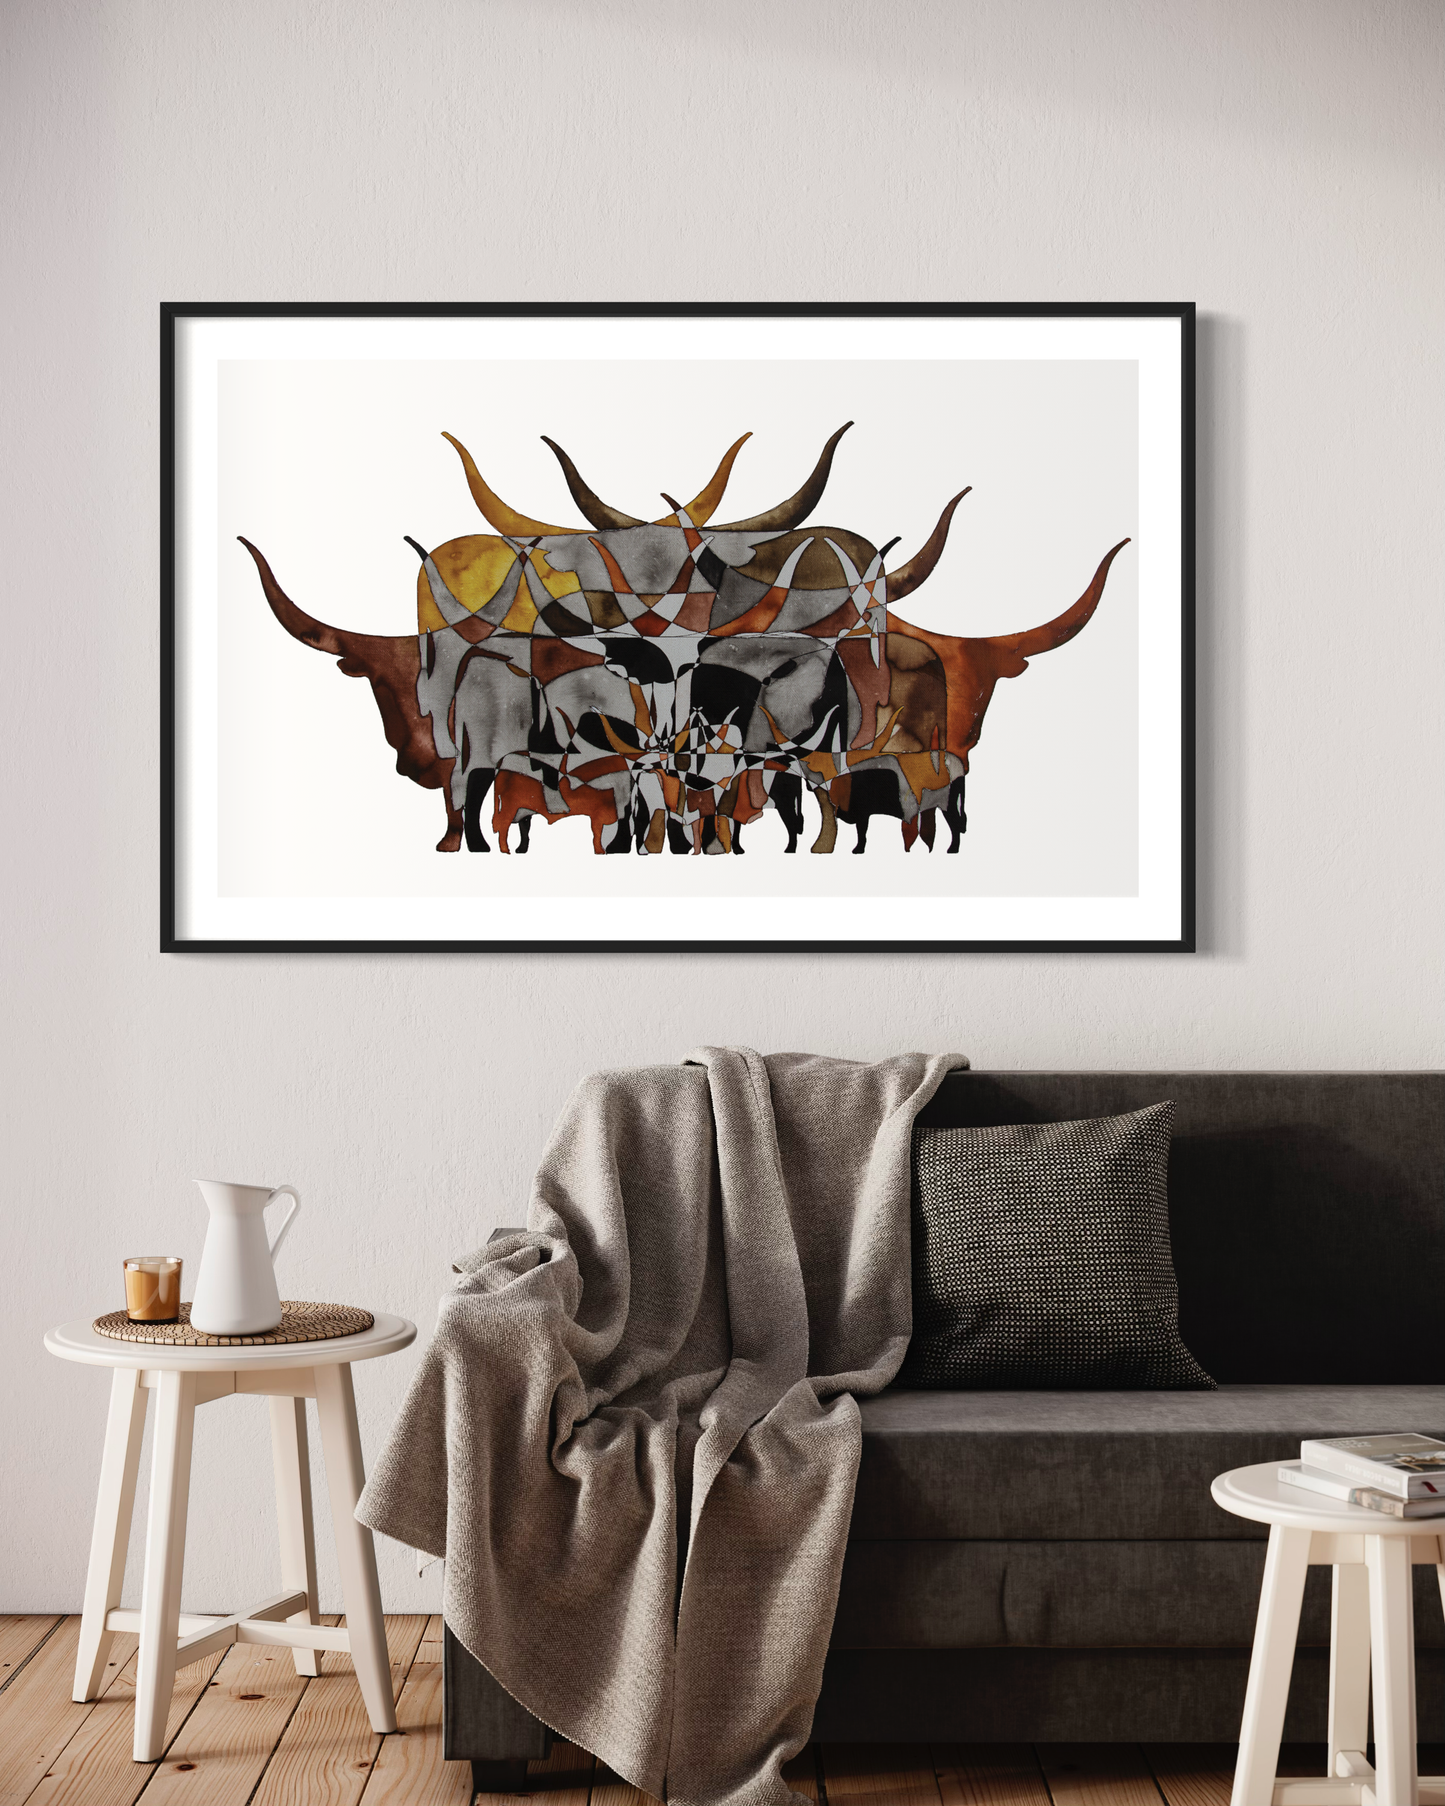 The herd poster